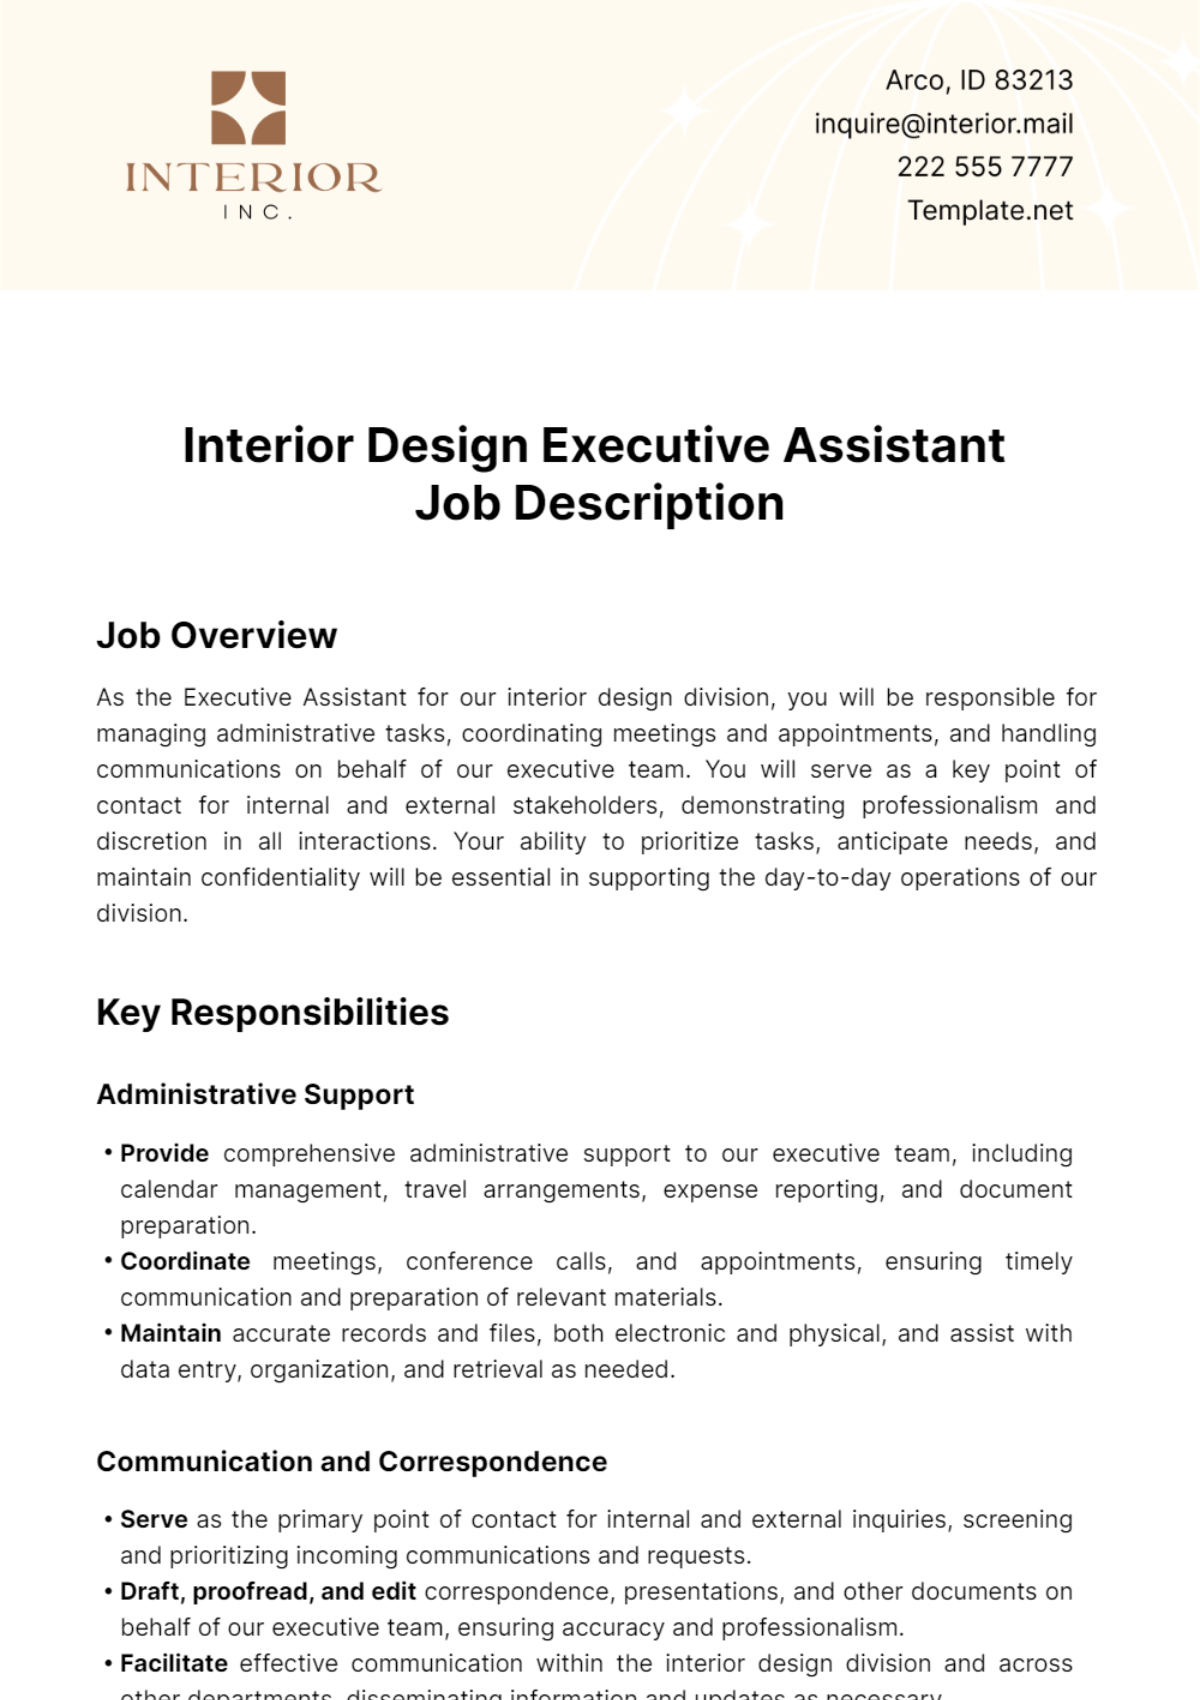 Interior Design Executive Assistant Job Description Template